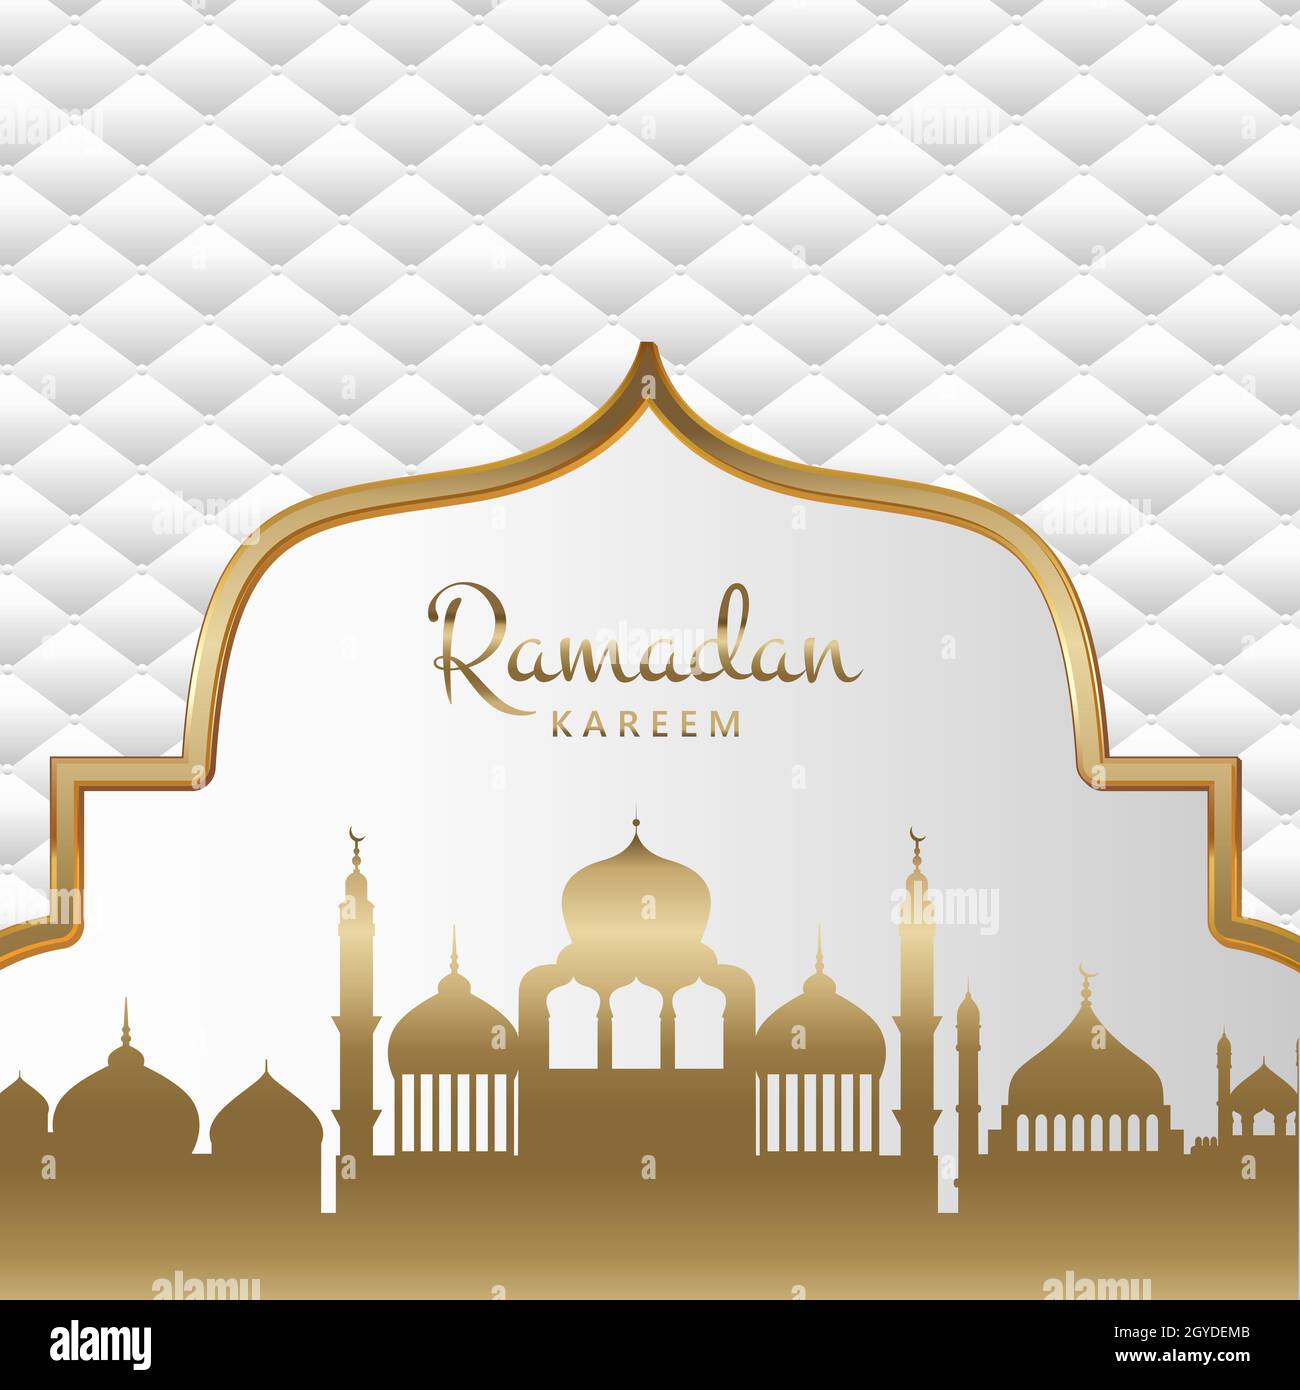 Gold and white decorative Ramadan Kareem background Stock Photo